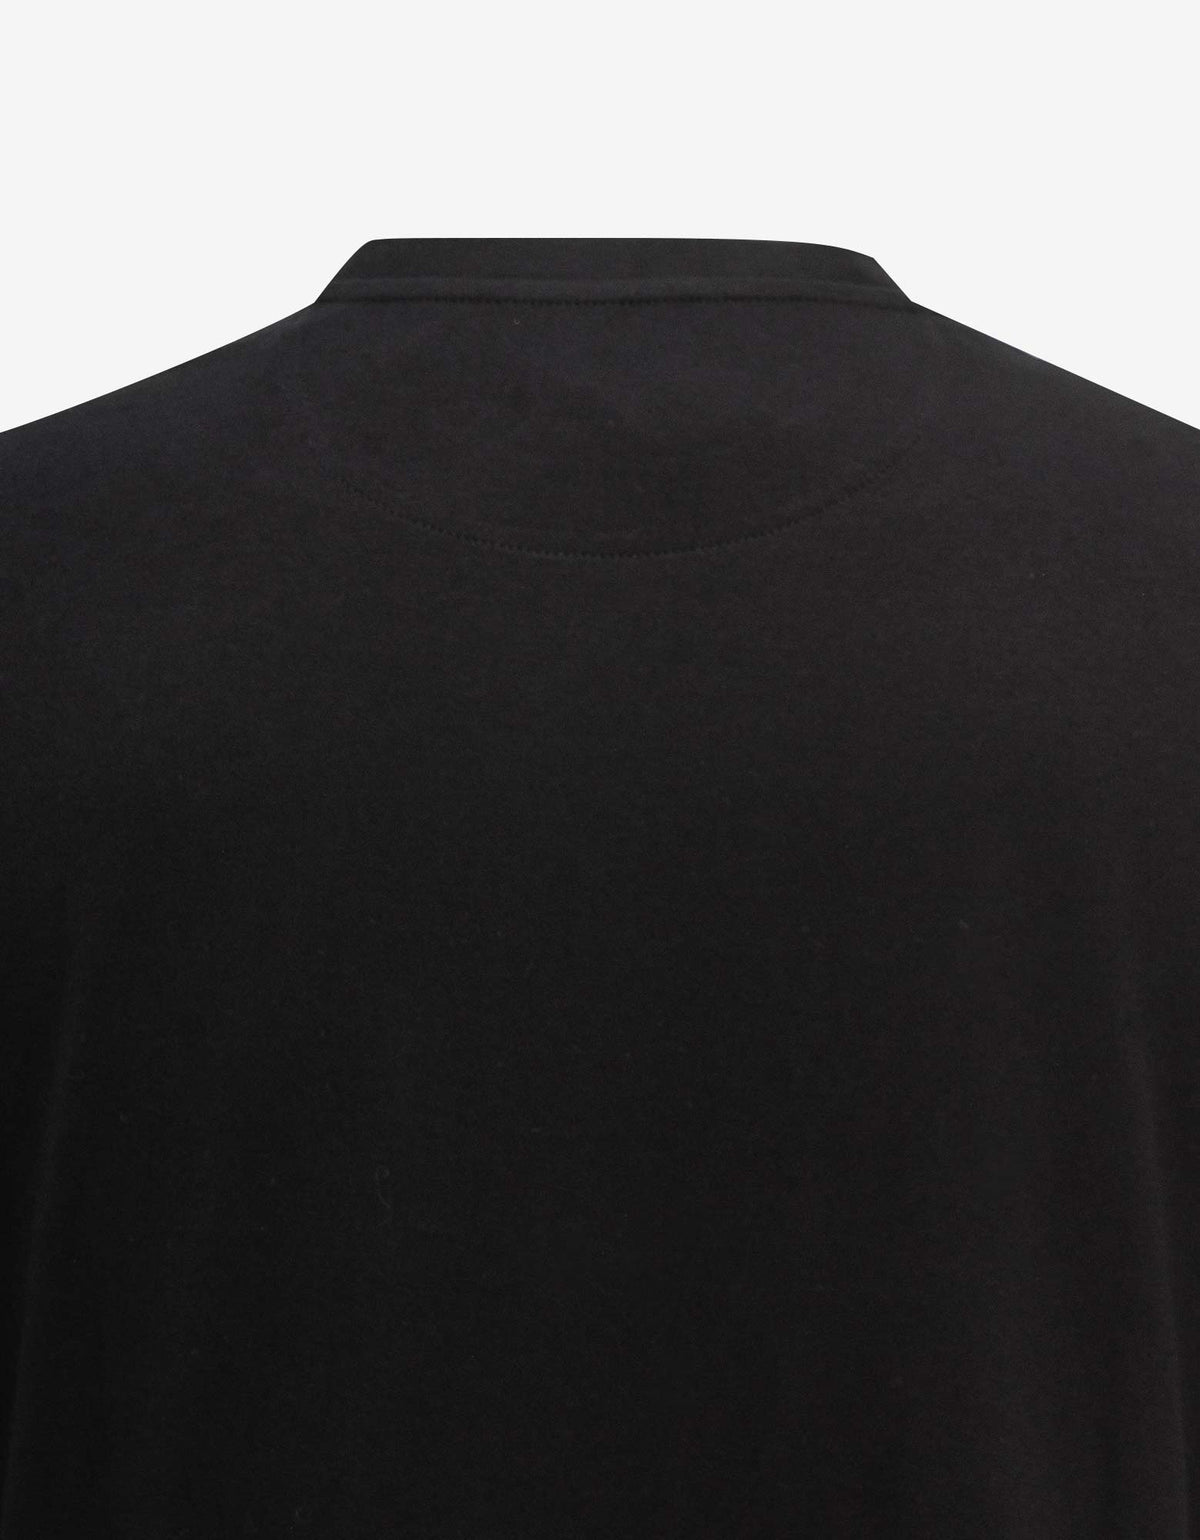 Valentino Black VLTN Embroidered T-Shirt